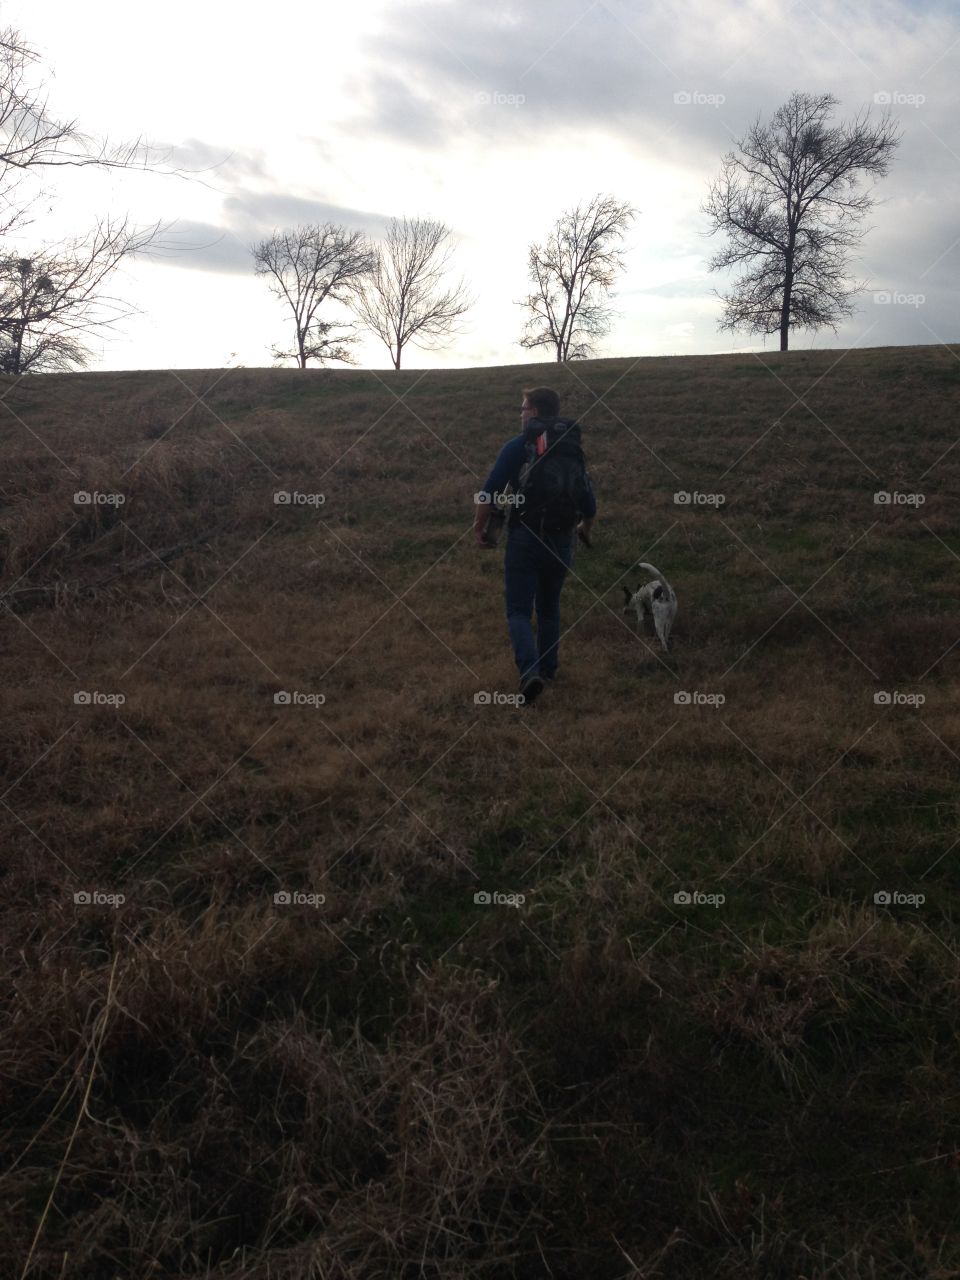 Hiking prep for Ireland along Texas prairie land